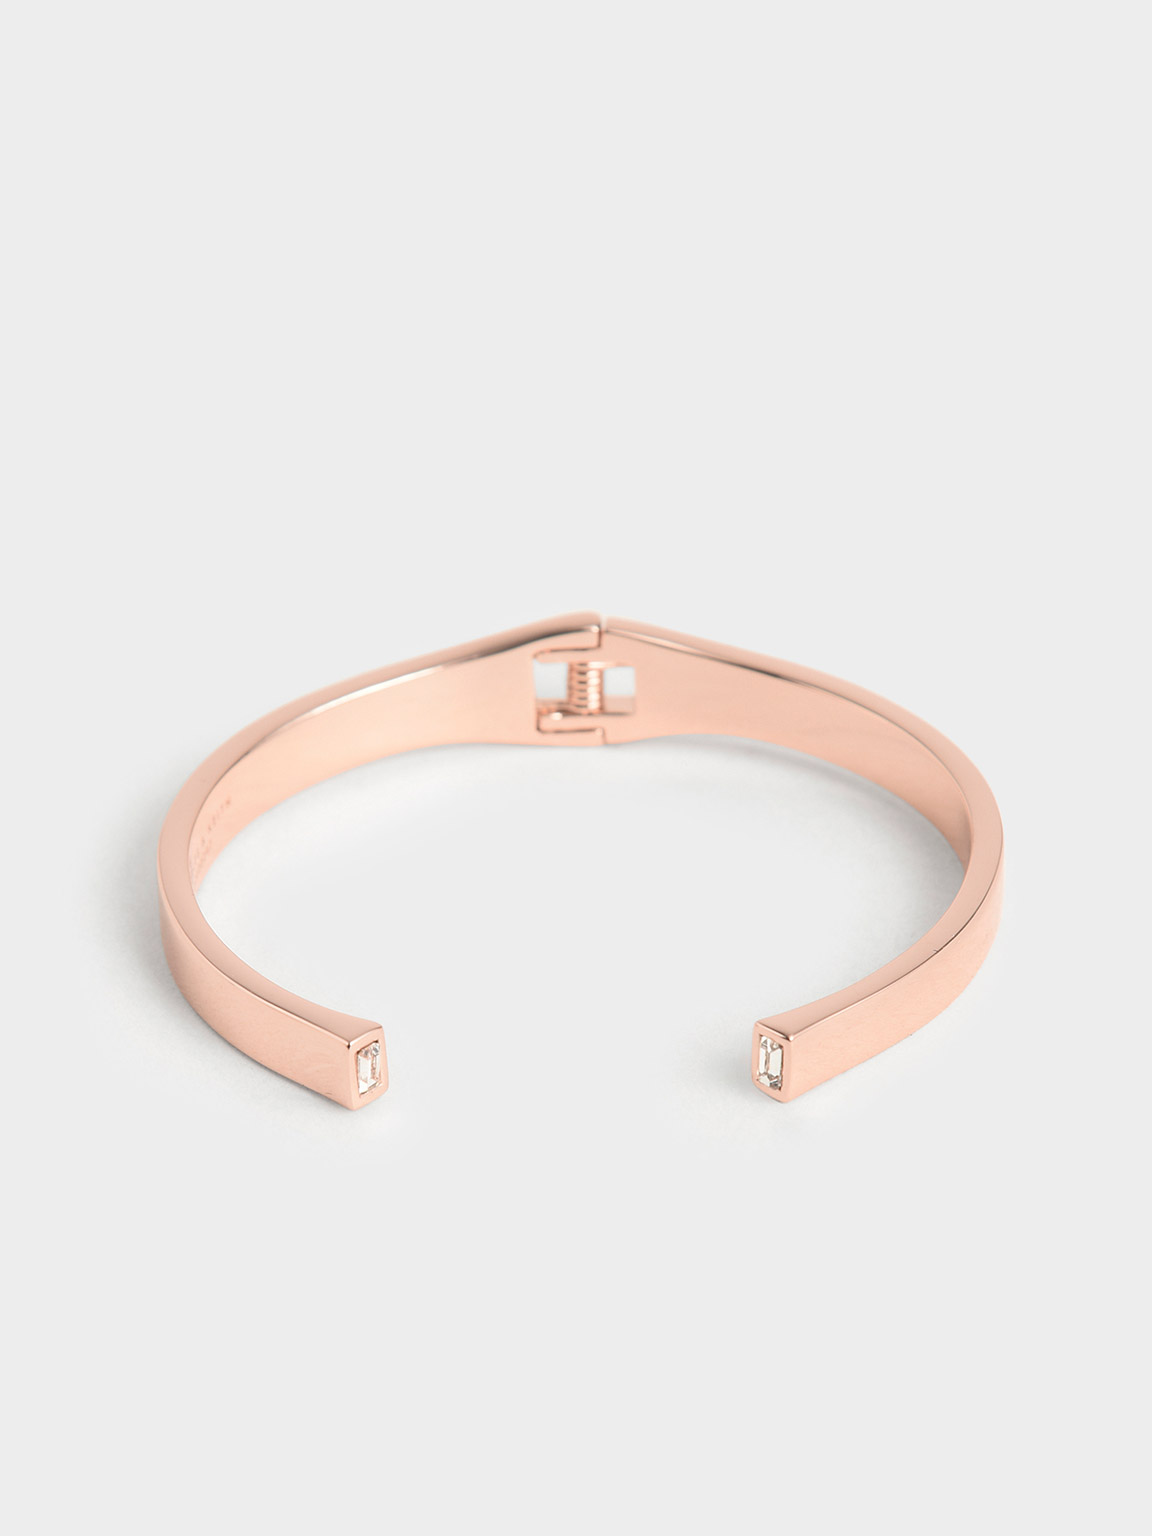 Swarovski(r) Crystal Cuff Bracelet